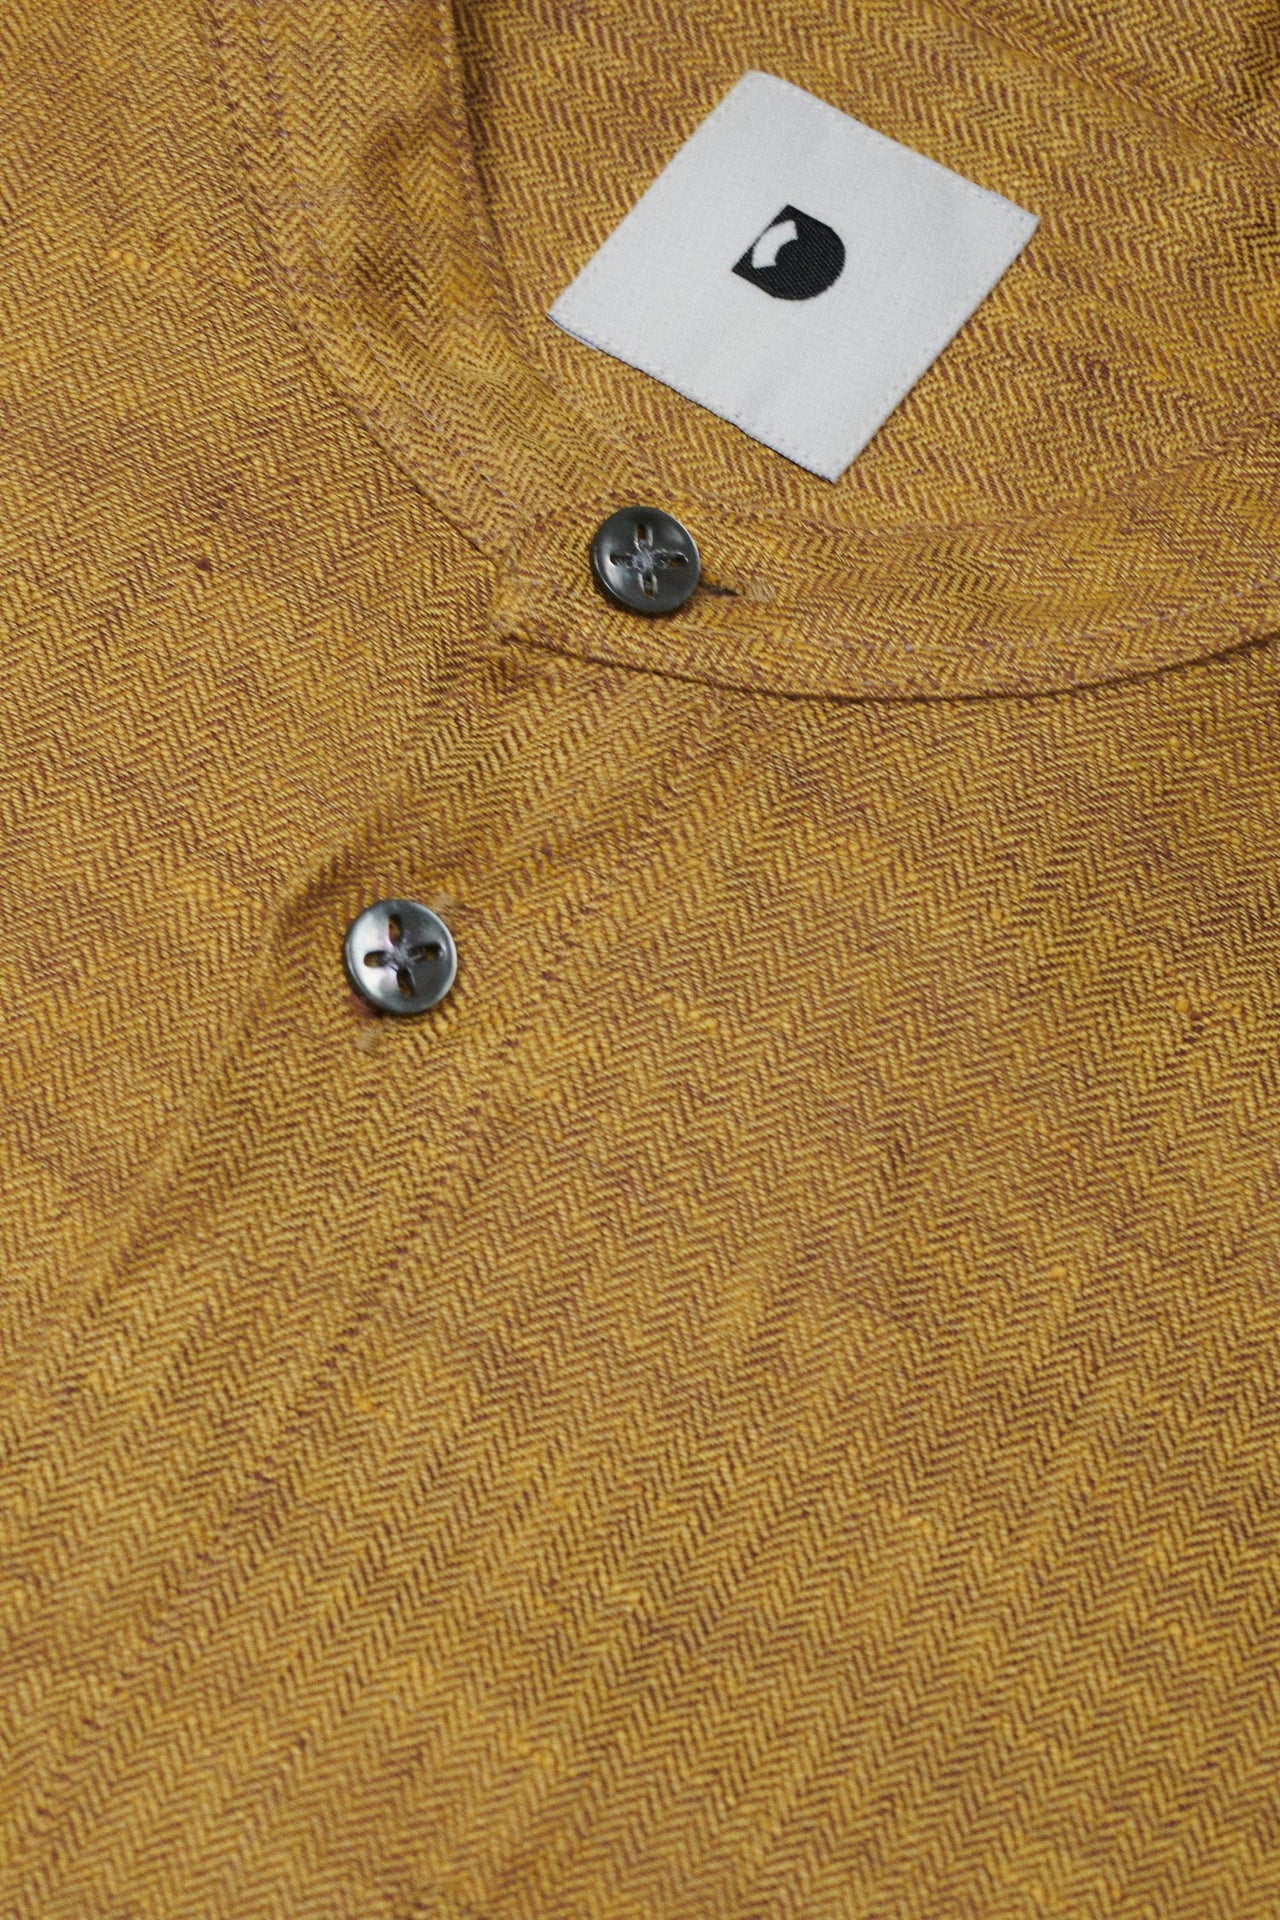 Zen Shirt in the Finest Yellow Italian Herringbone Linen